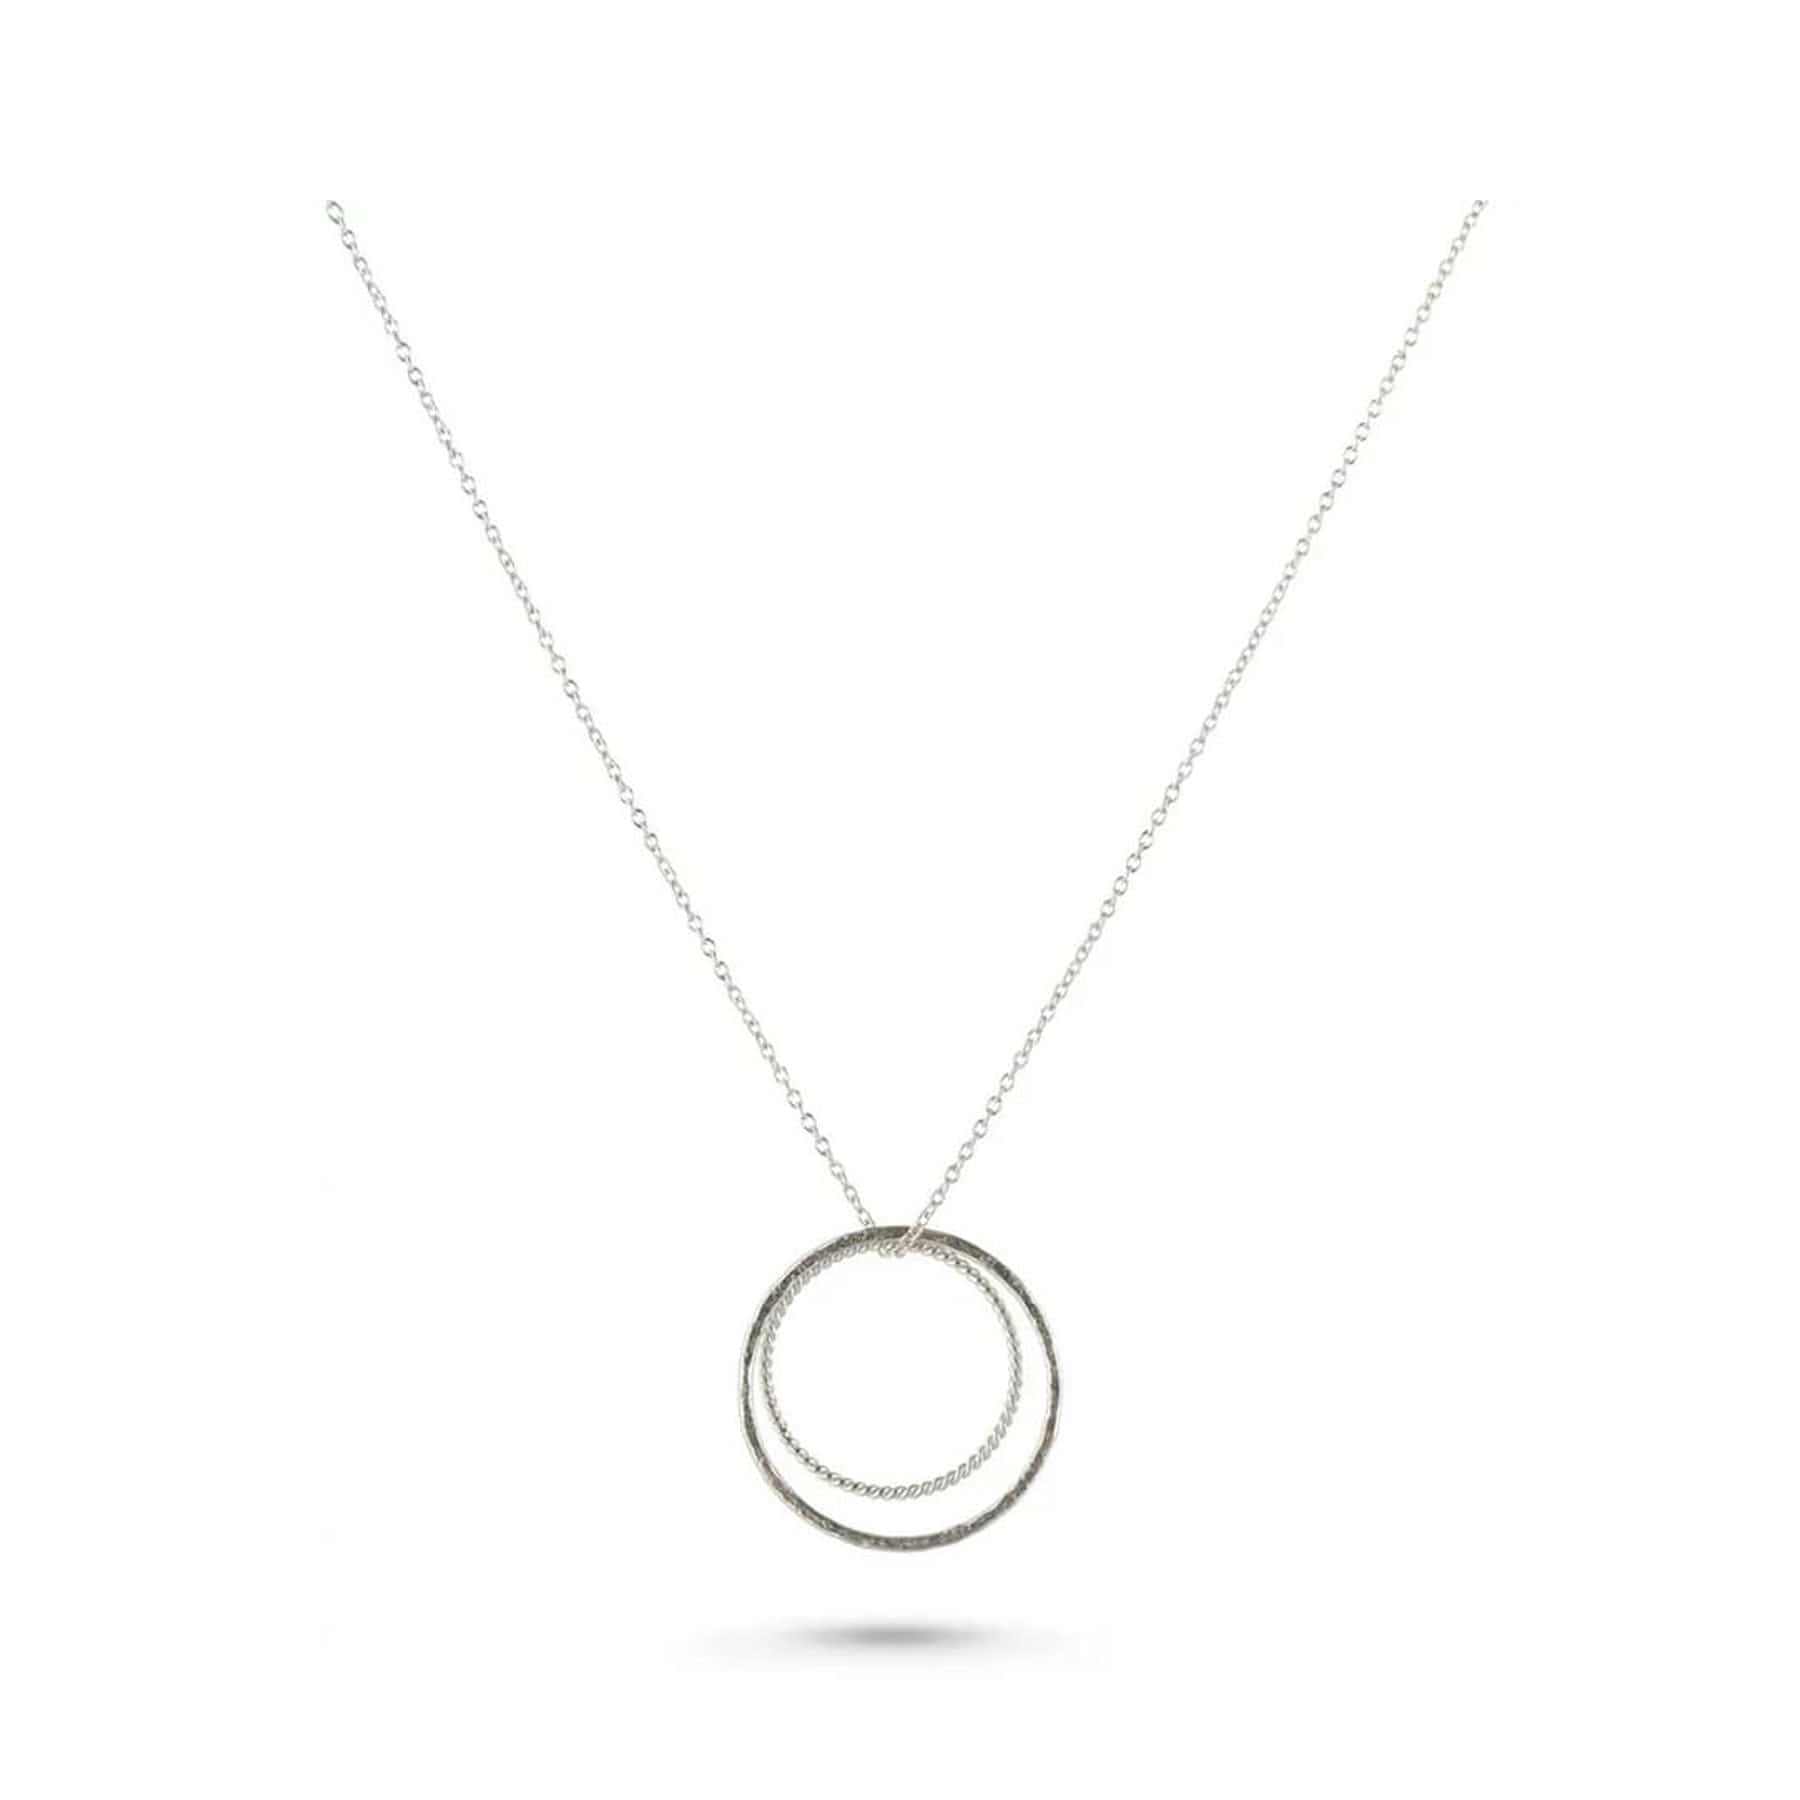 Silver twist double hoop necklace